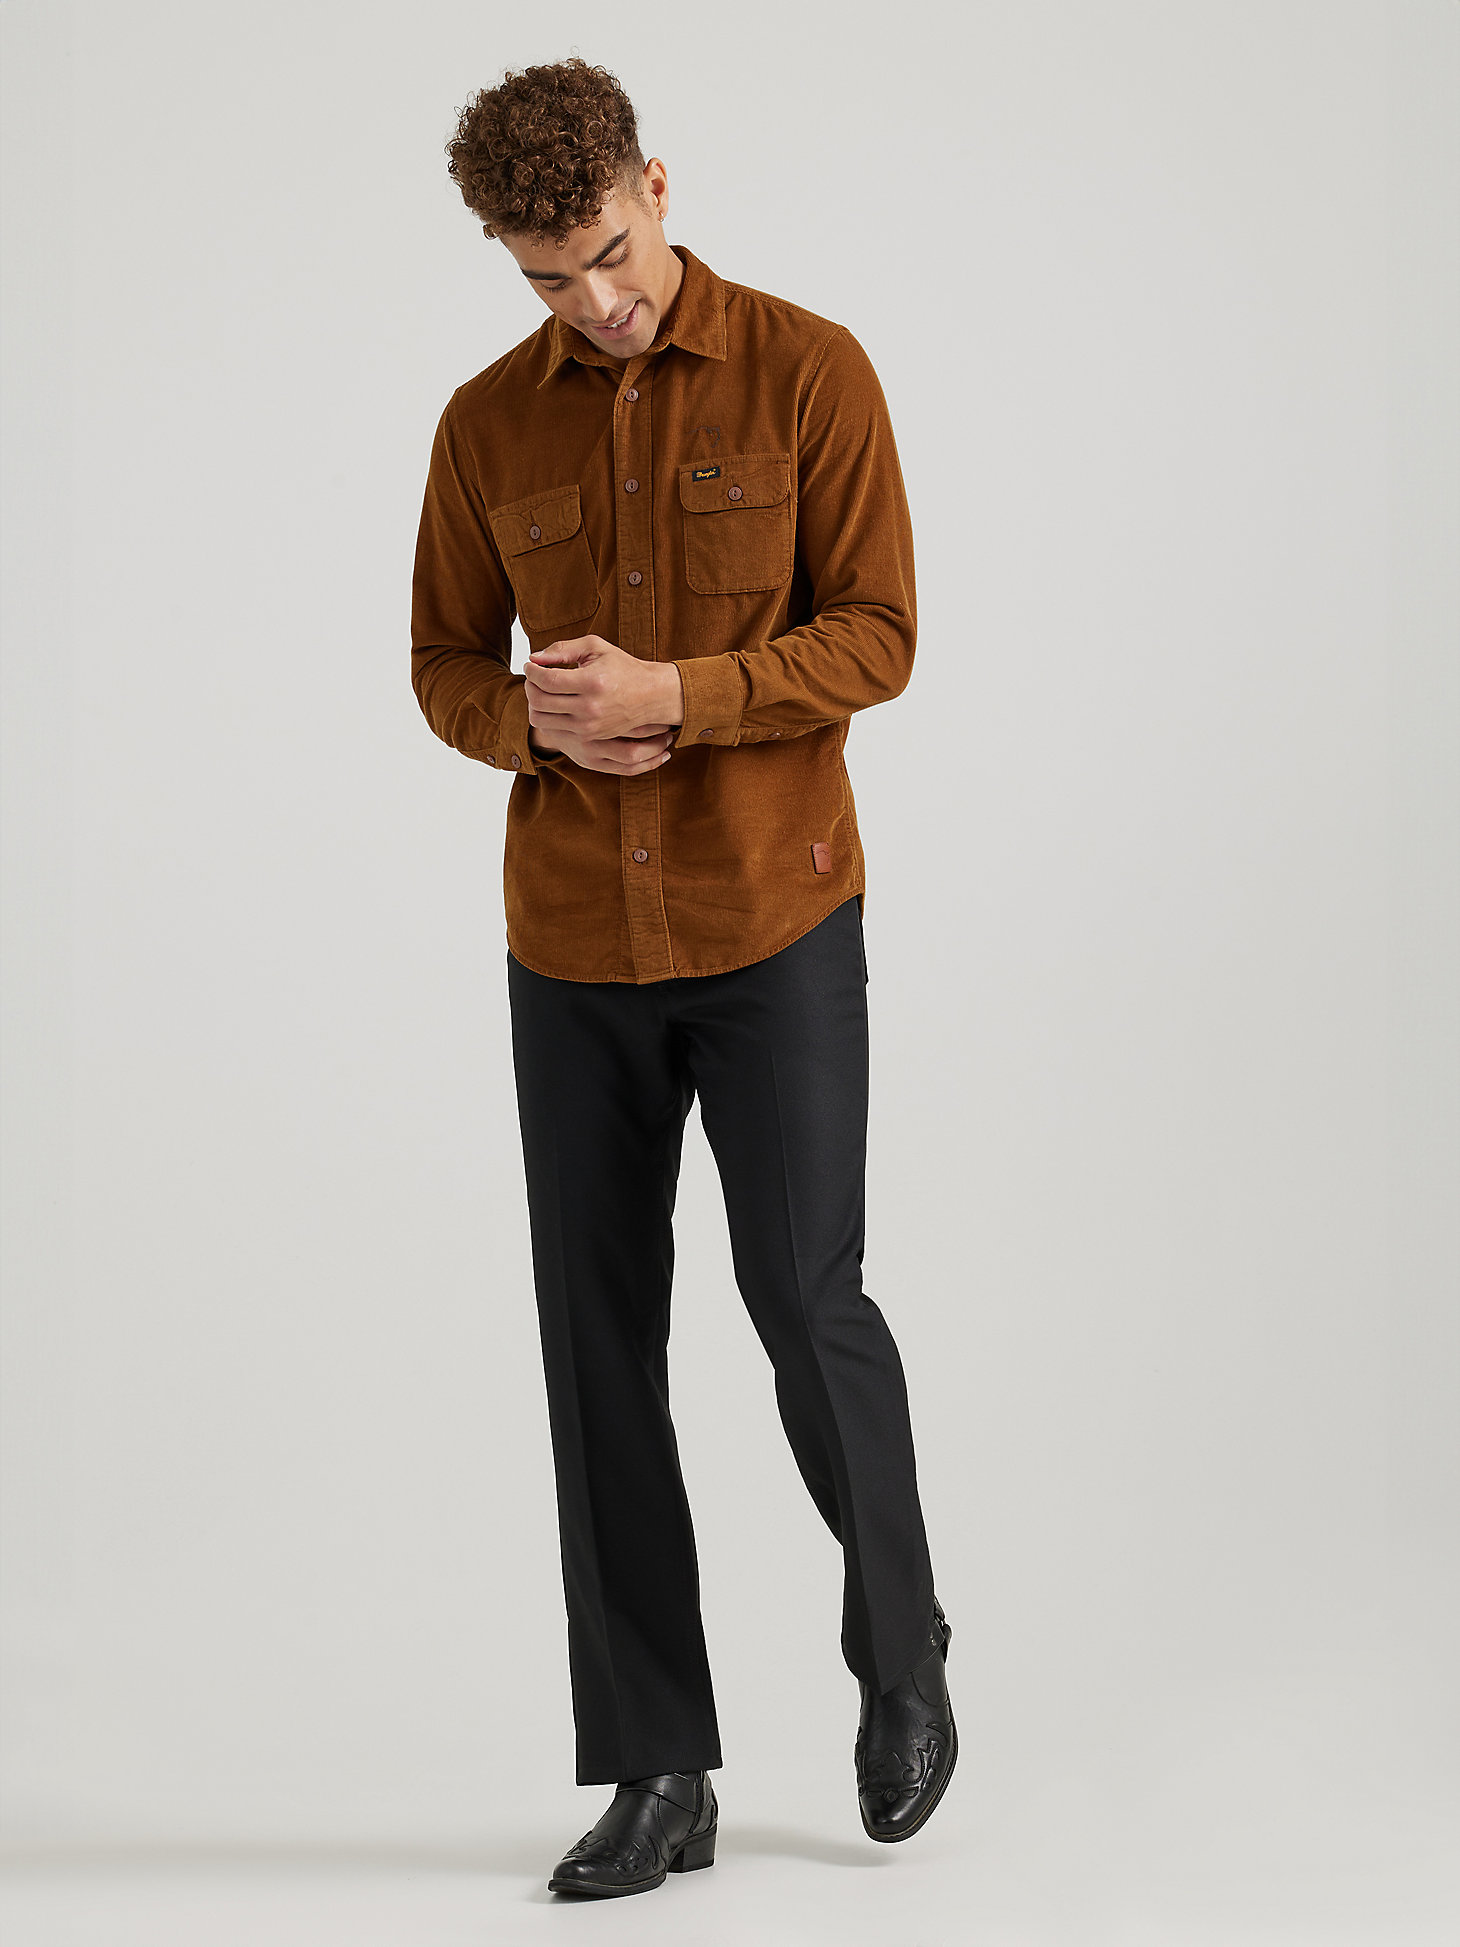 Wrangler x Buffalo Trace™ Men's Corduroy Shirt in Old Fashioned alternative view 3